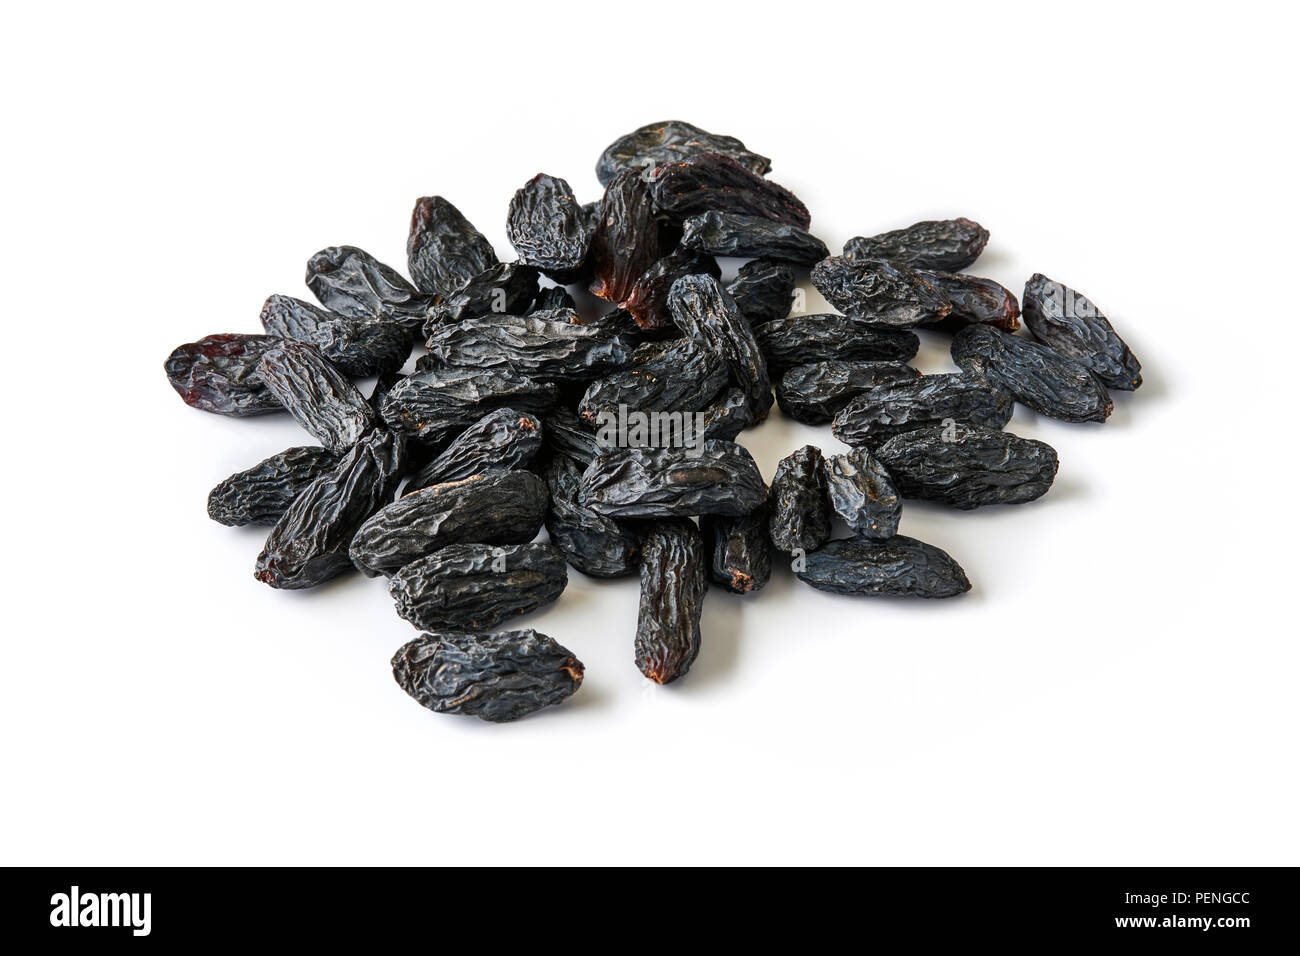 Heap of black raisins isolated on white background. Stock Photo